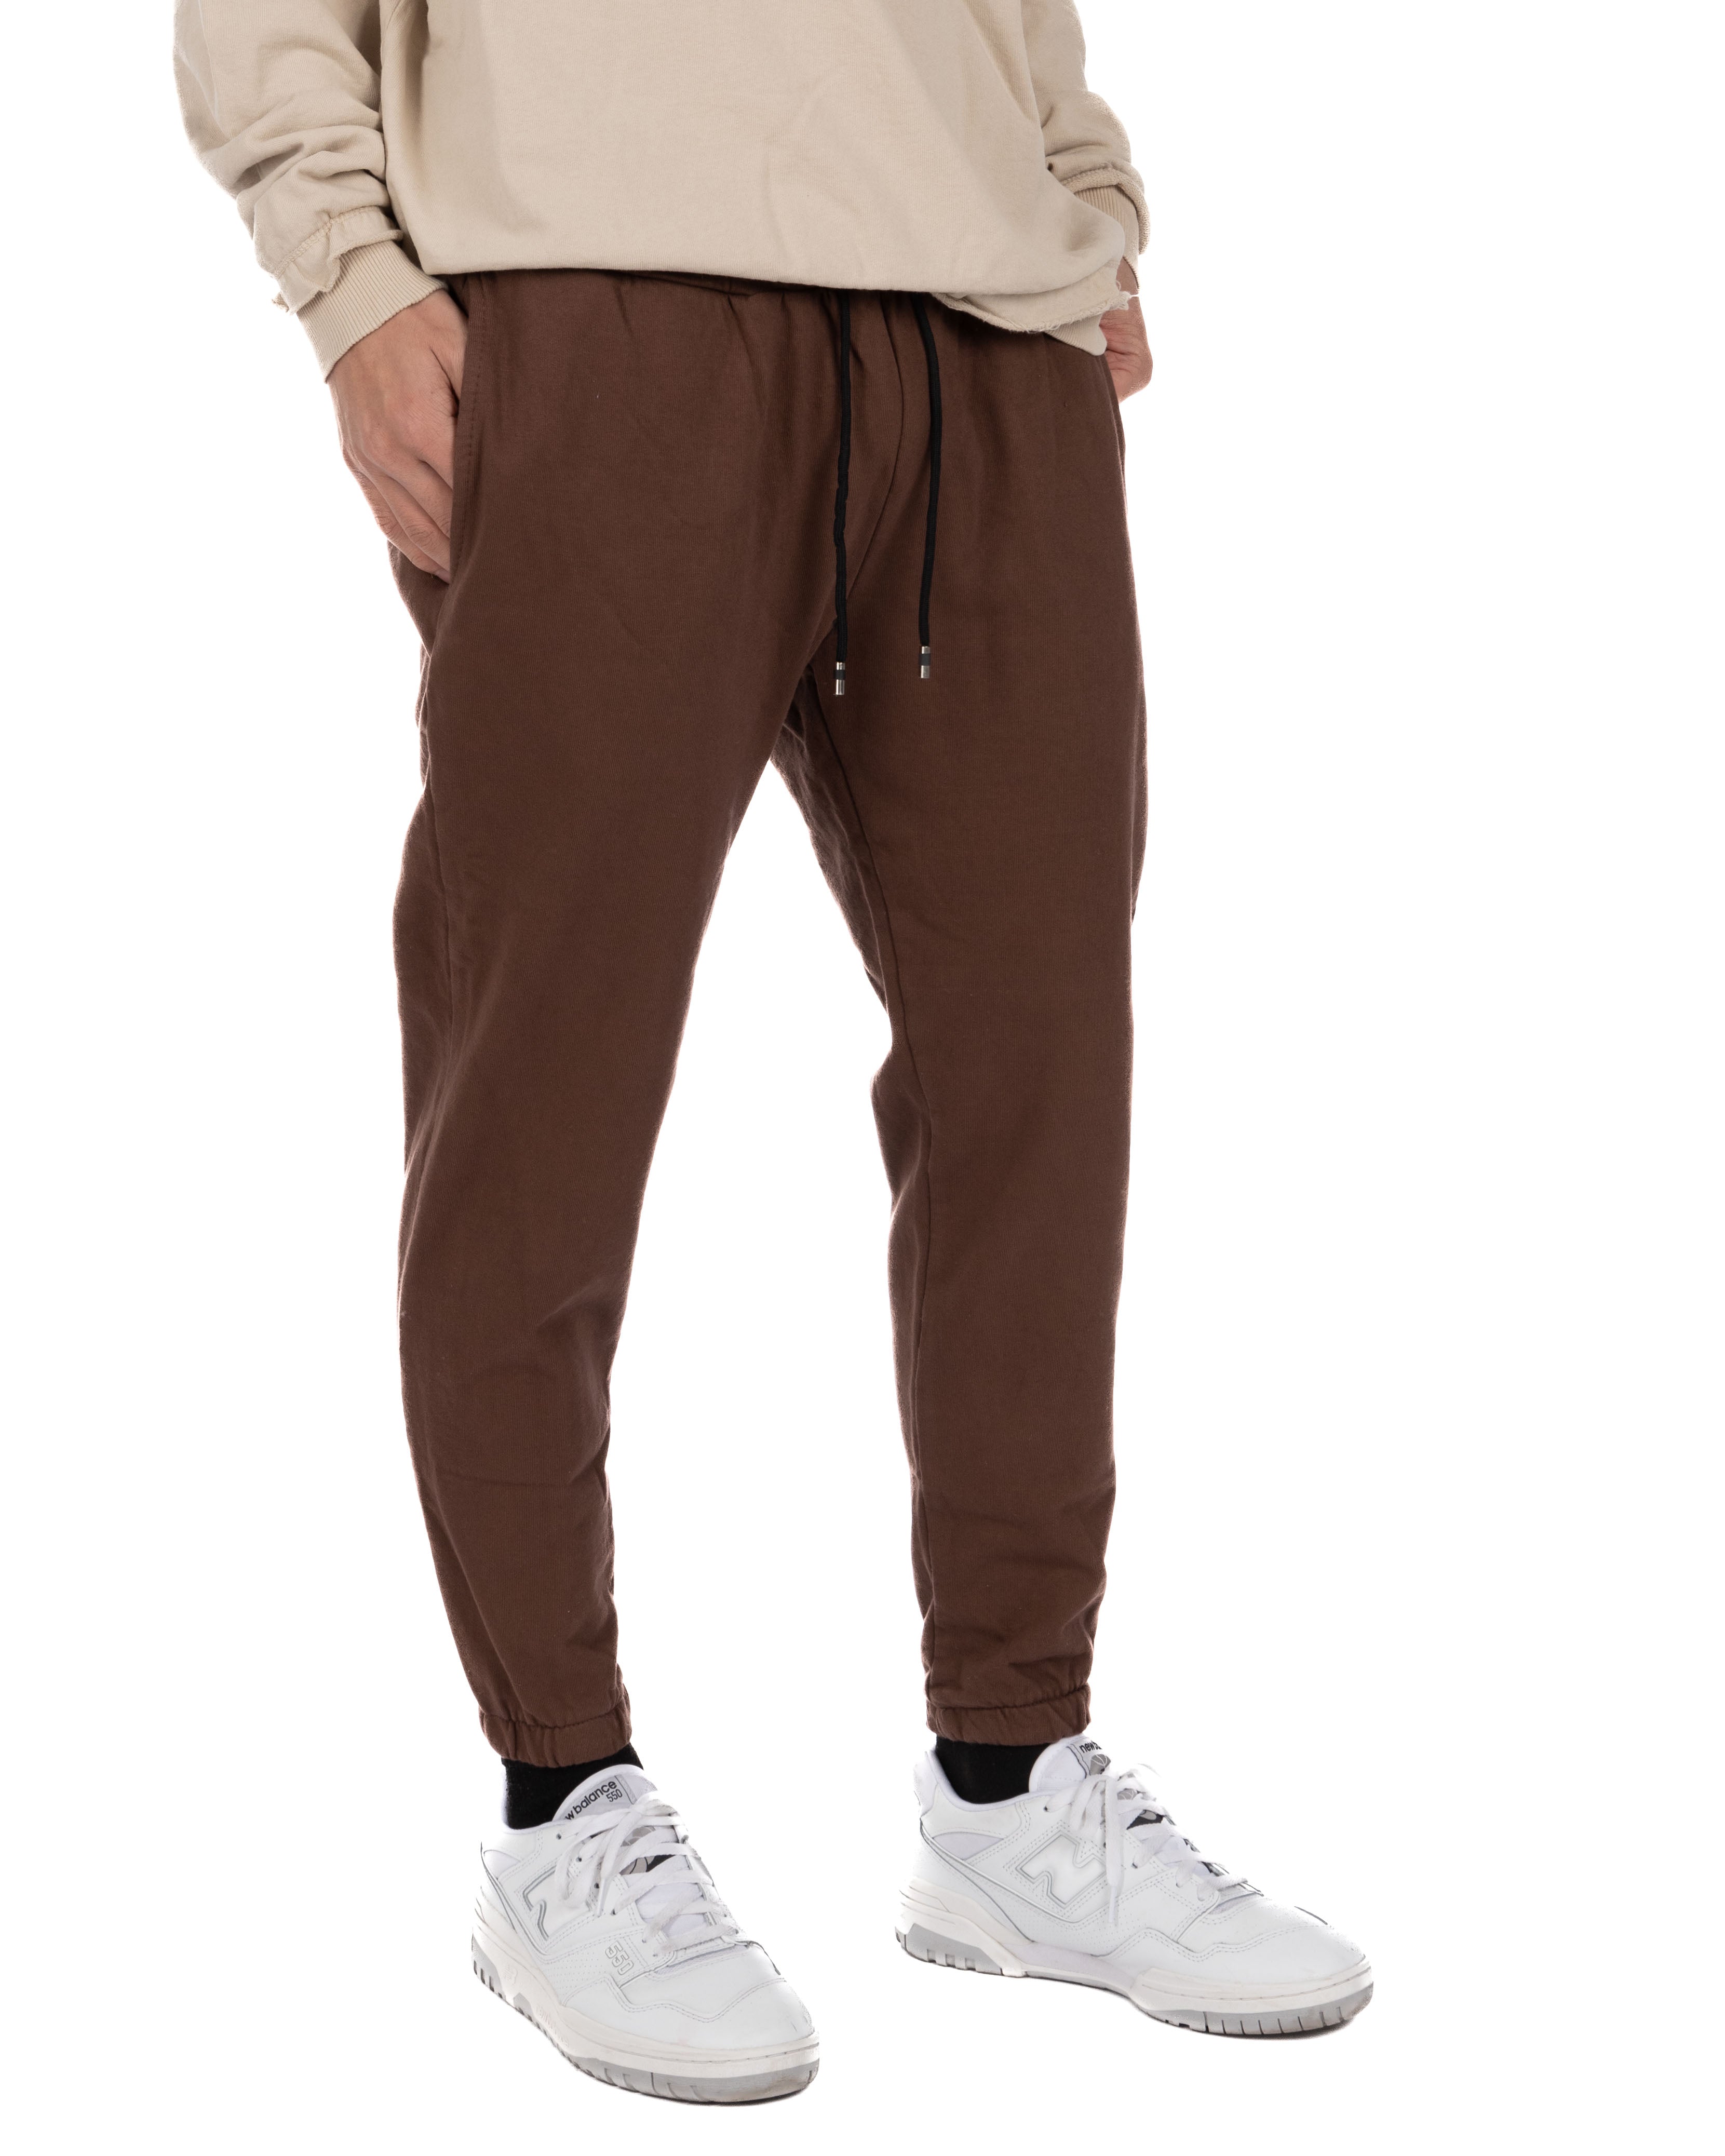 Hans - dark brown tracksuit trousers